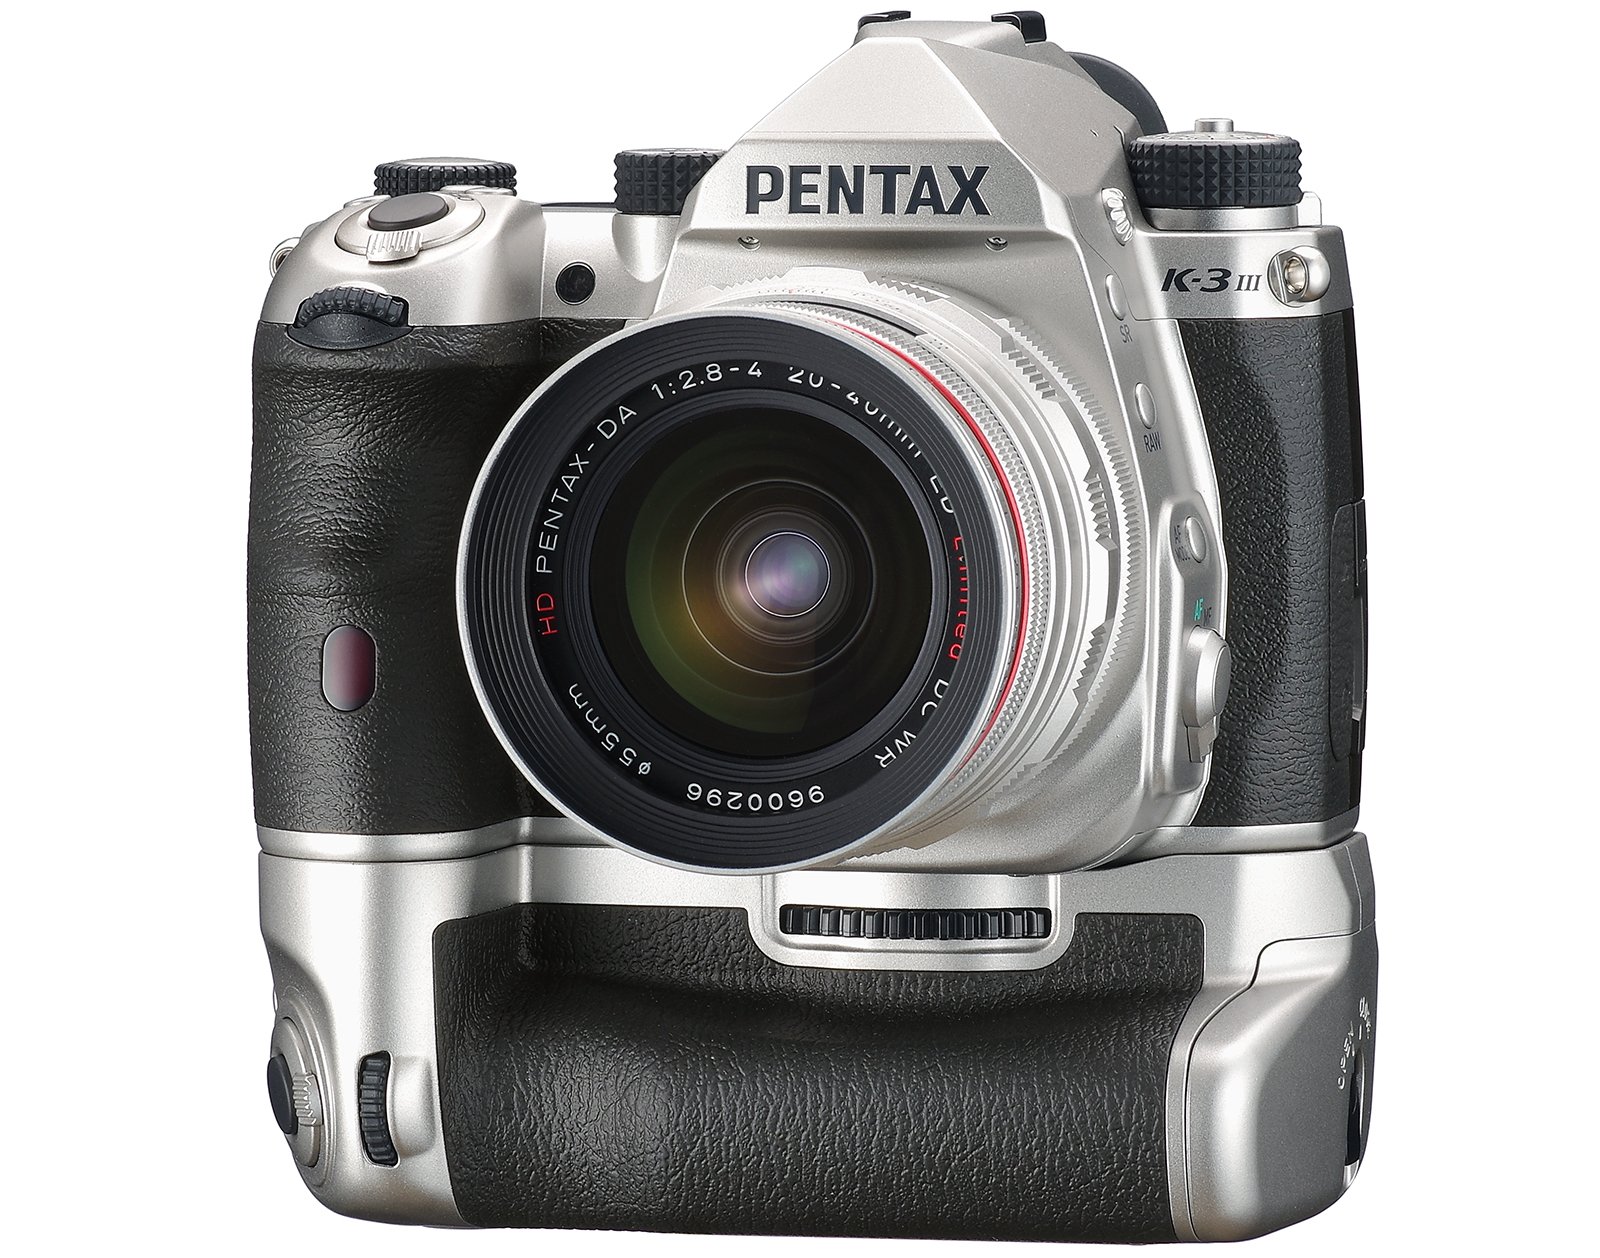 Ricoh Launches the Pentax K-3 Mark III, Its Flagship APS-C DSLR | PetaPixel